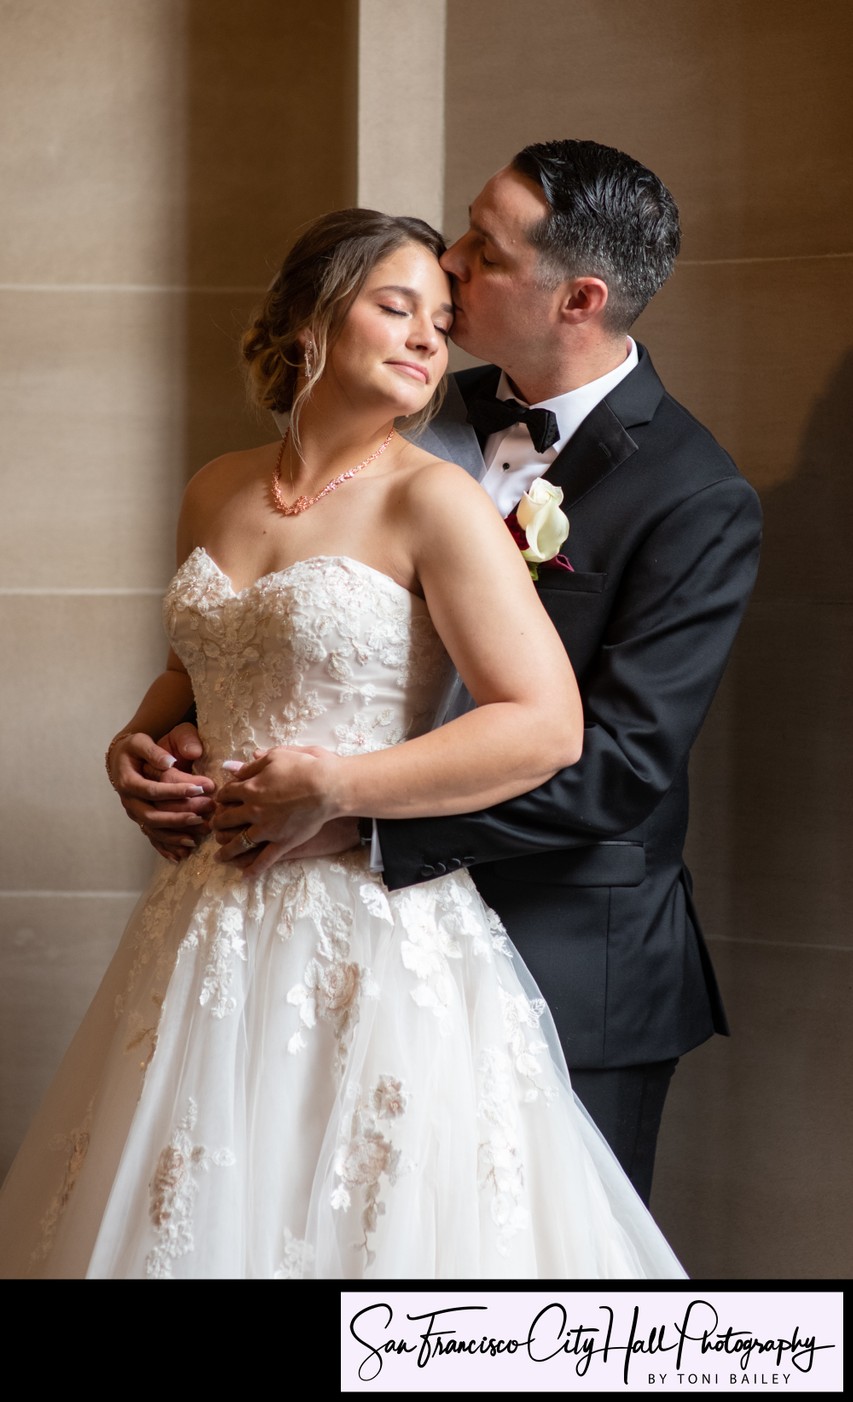 Romantic wedding photography - kiss at city hall